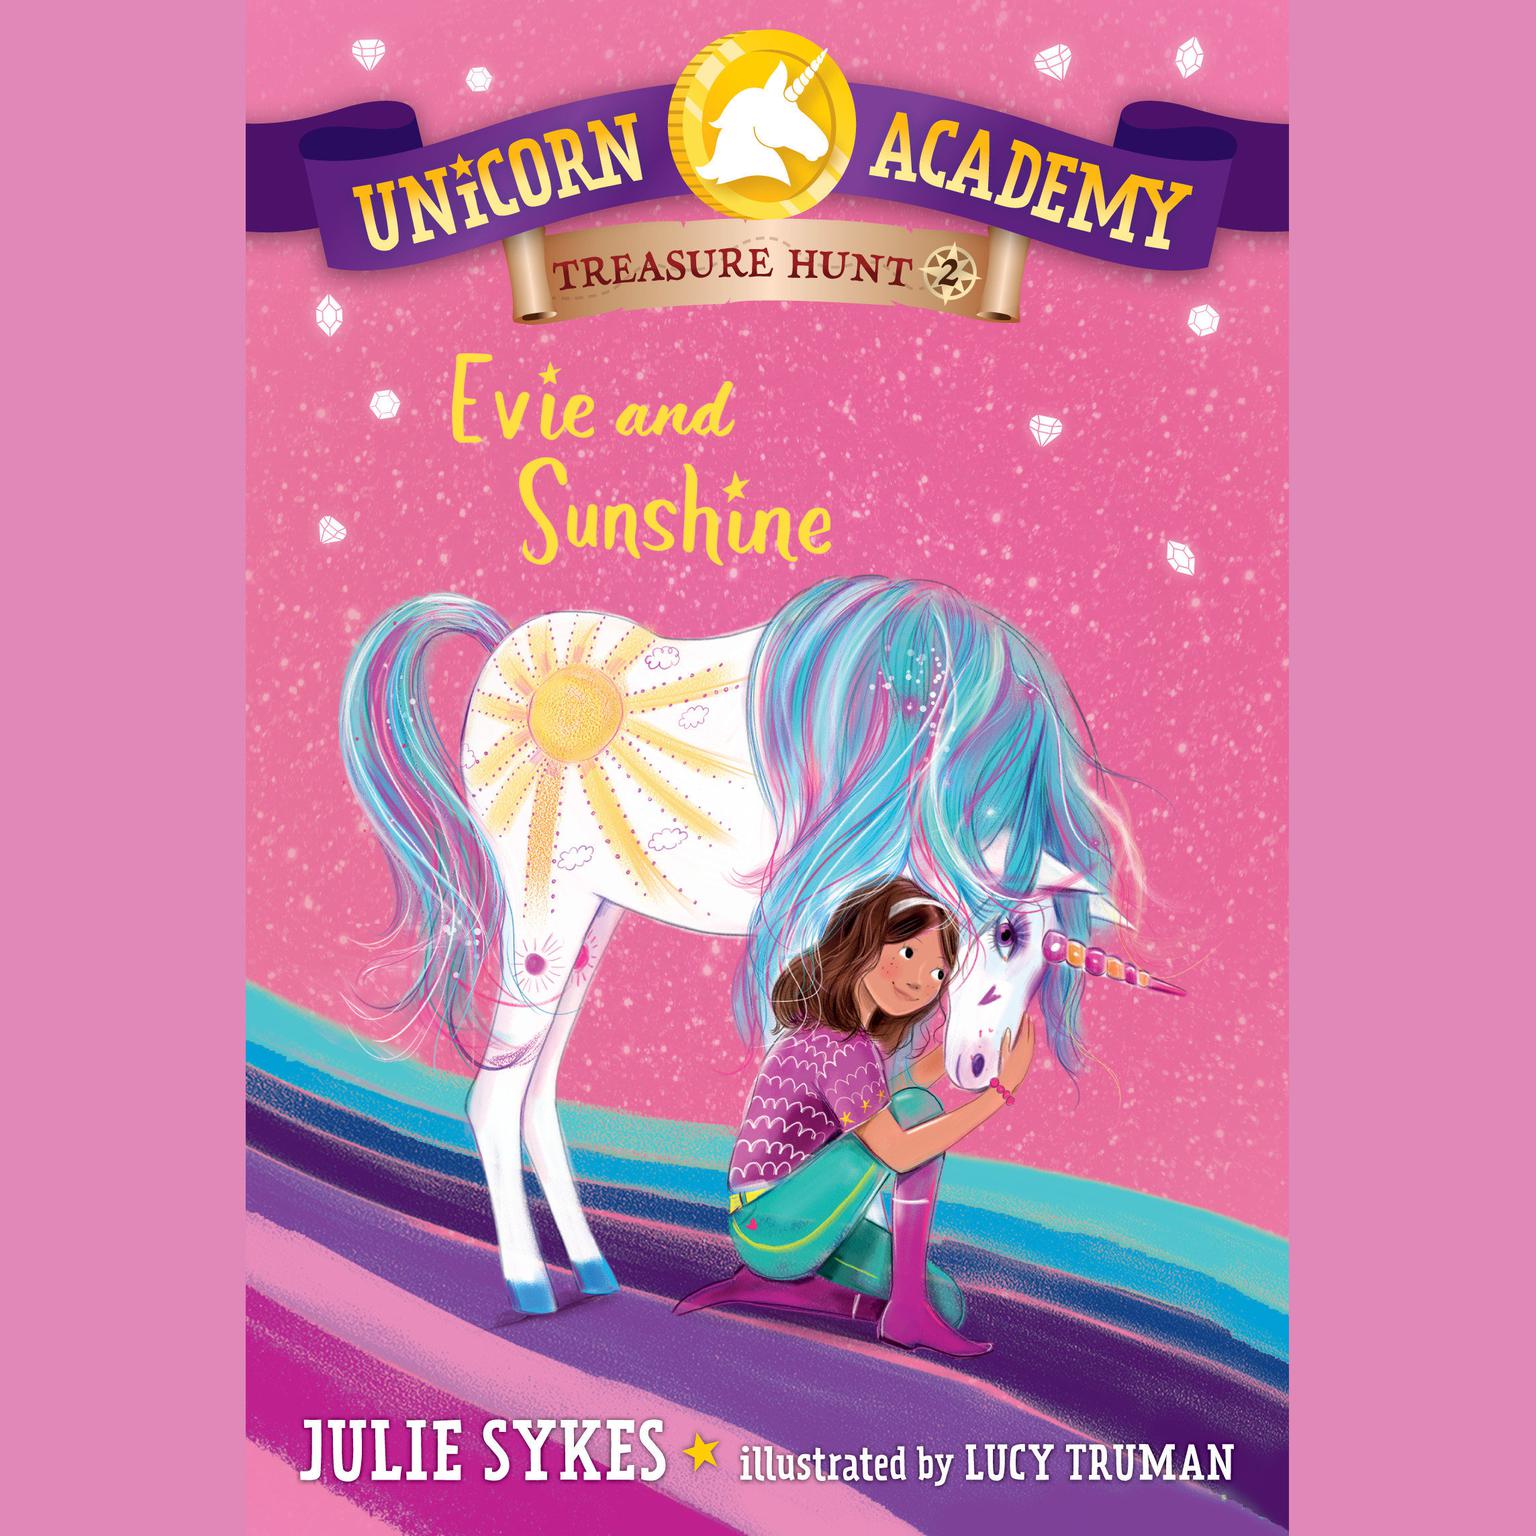 Unicorn Academy Treasure Hunt #2: Evie and Sunshine Audiobook, by Julie Sykes